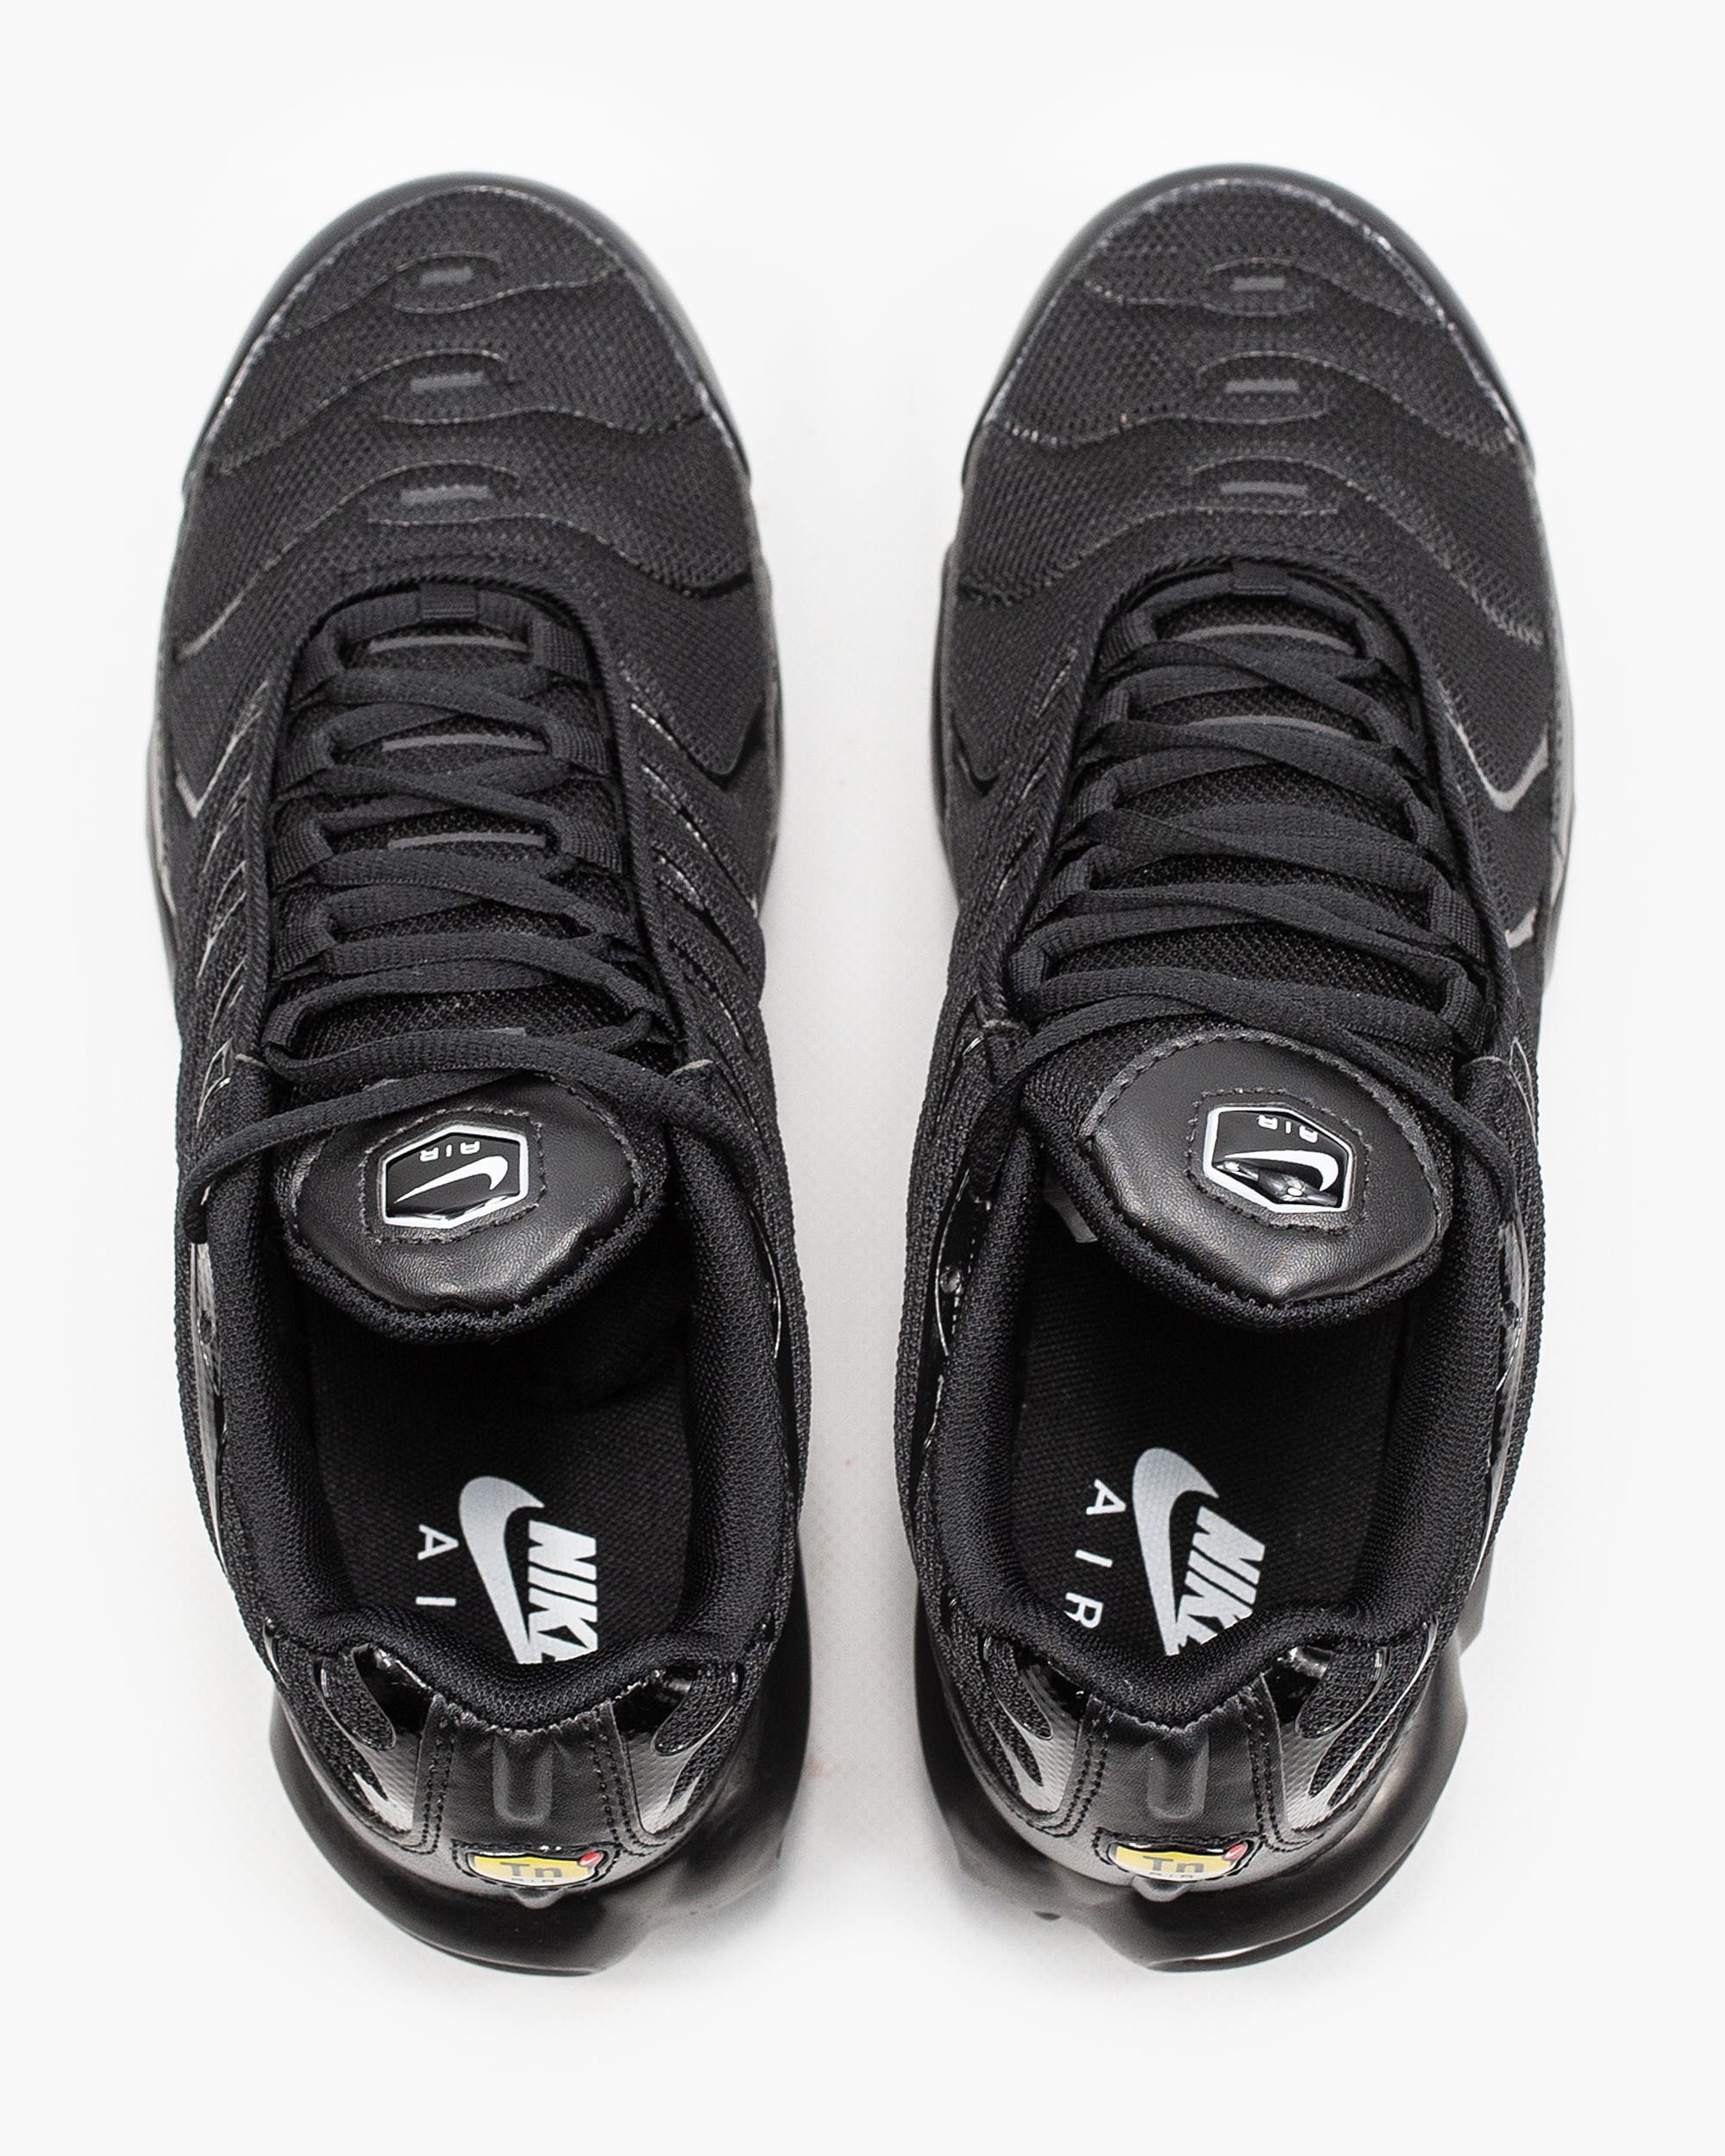 Мужские кроссовки Nike Air Max Plus TN Black Total. Размеры 40-45